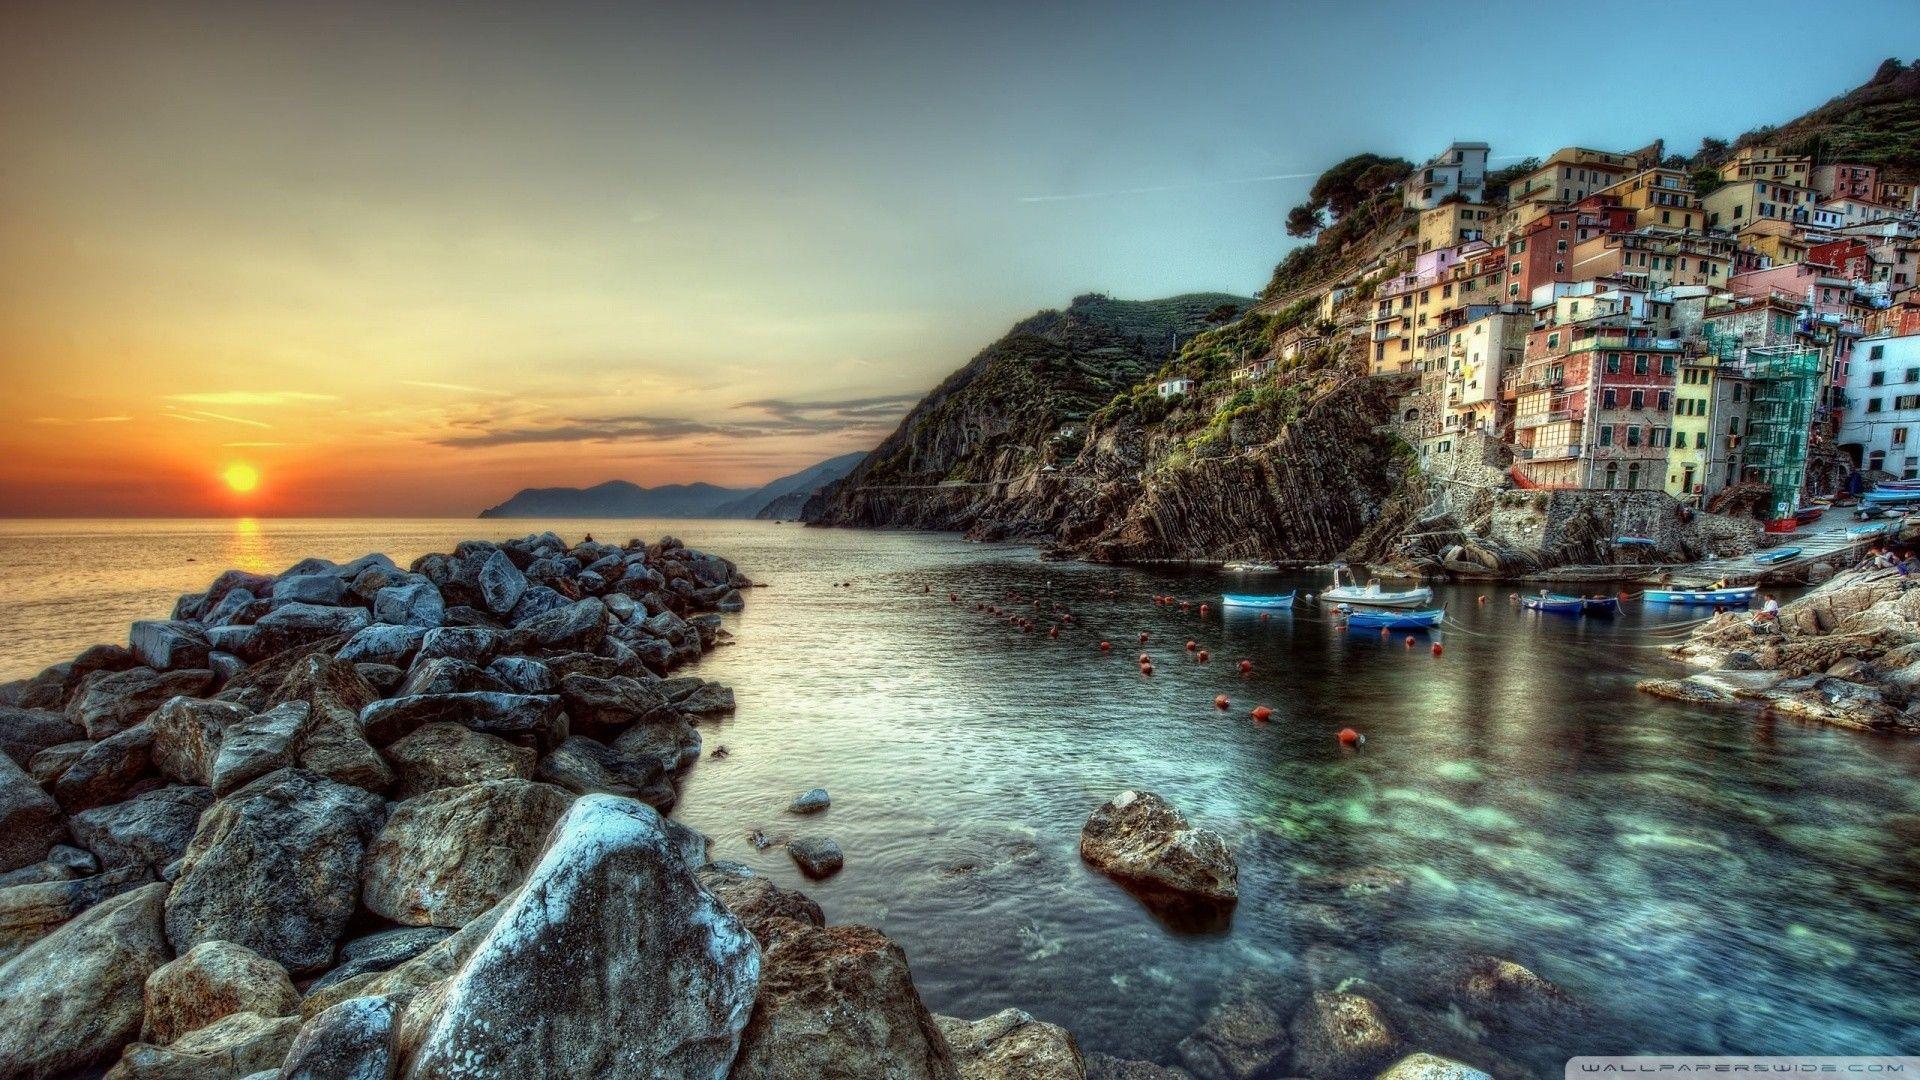 Seashore at sunset, the resort Cinque Terre in Italy wallpaper